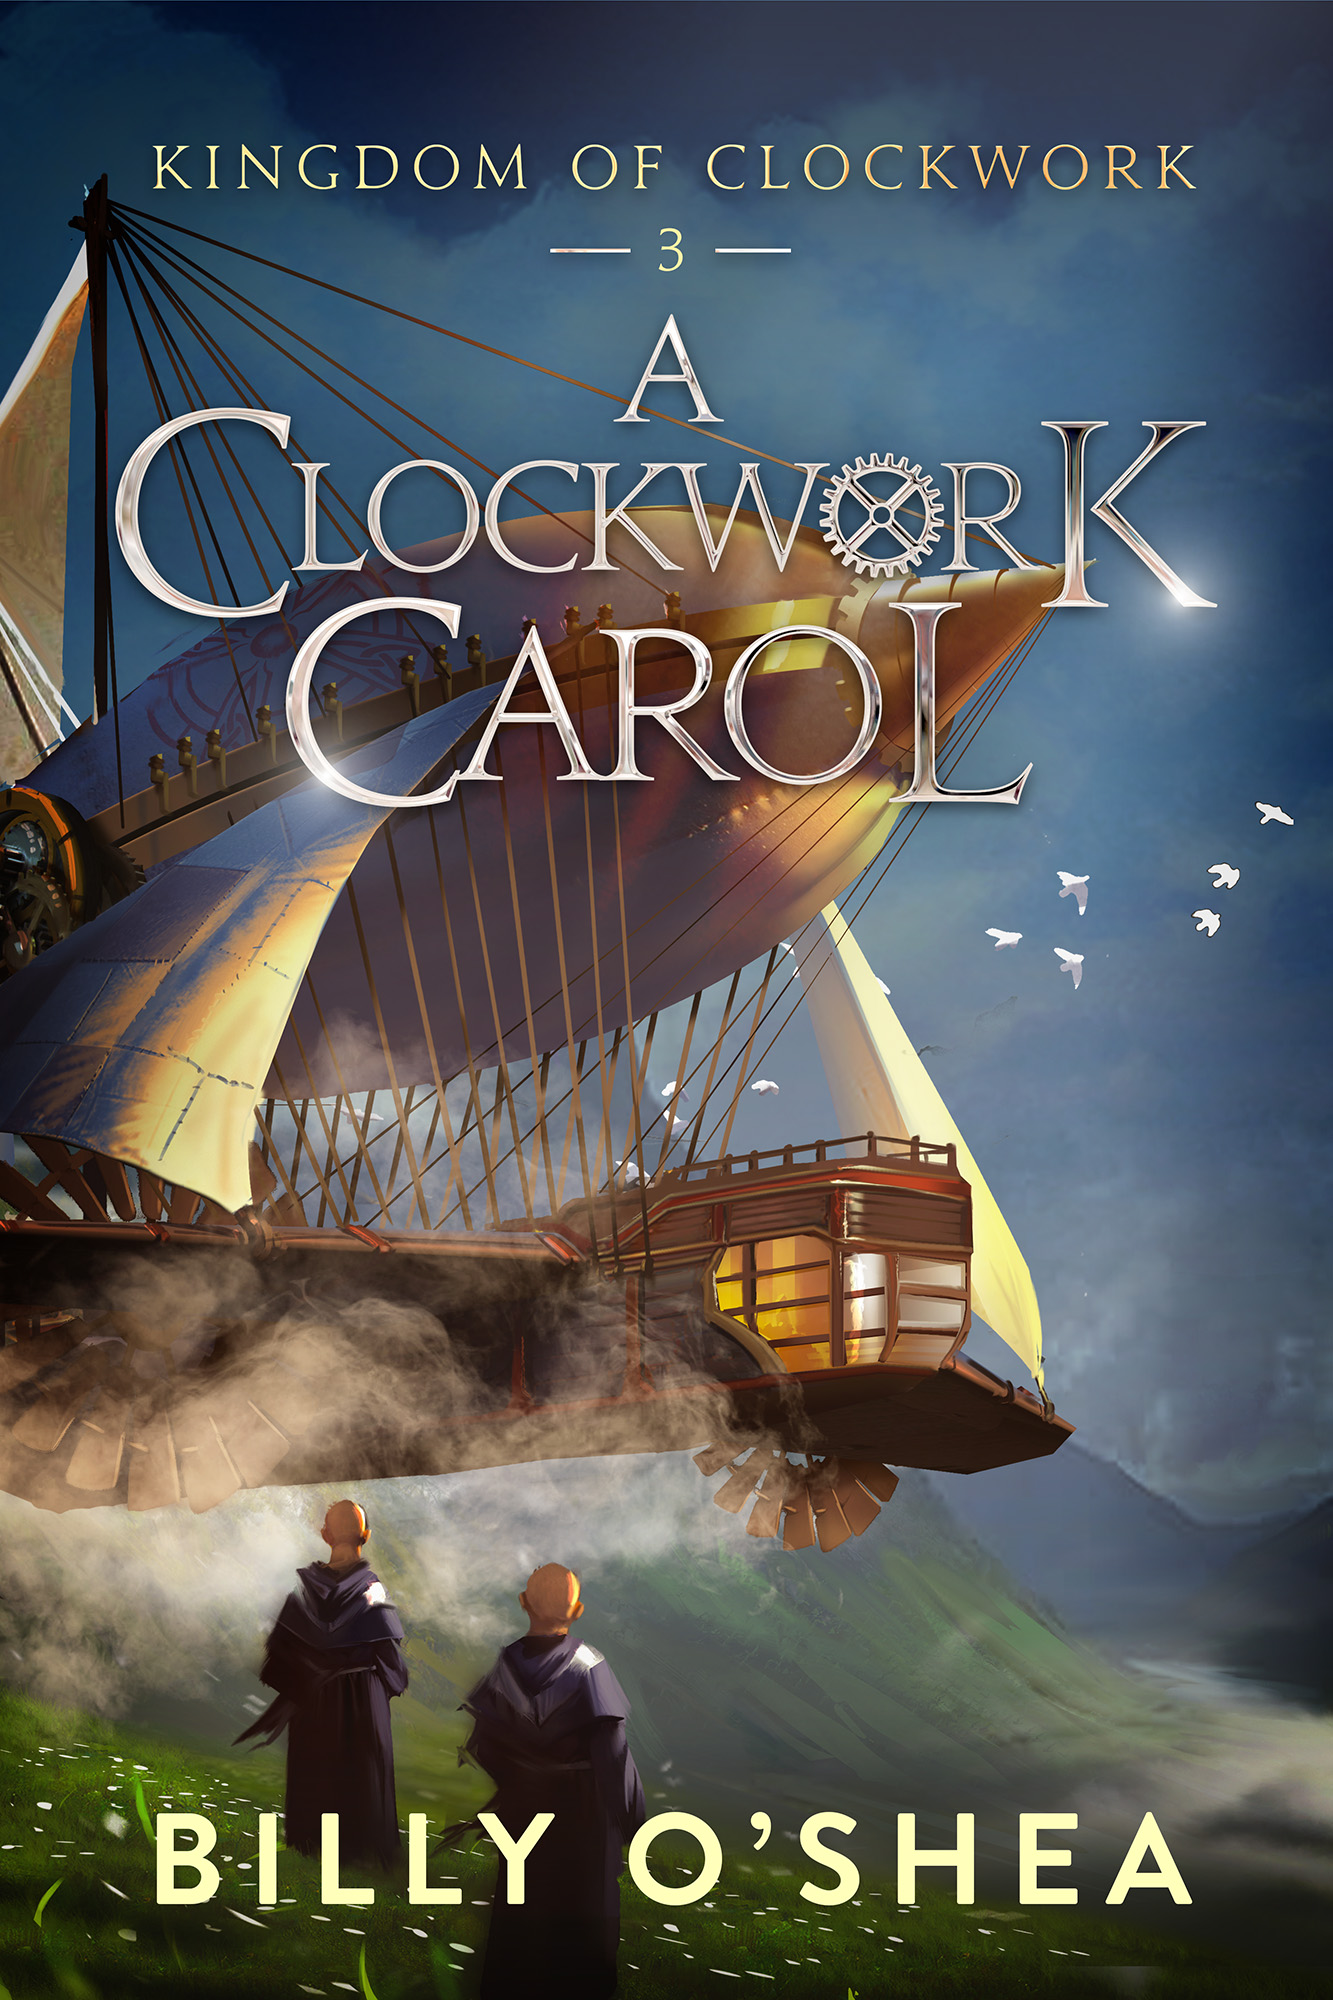 A Clockwork Carol